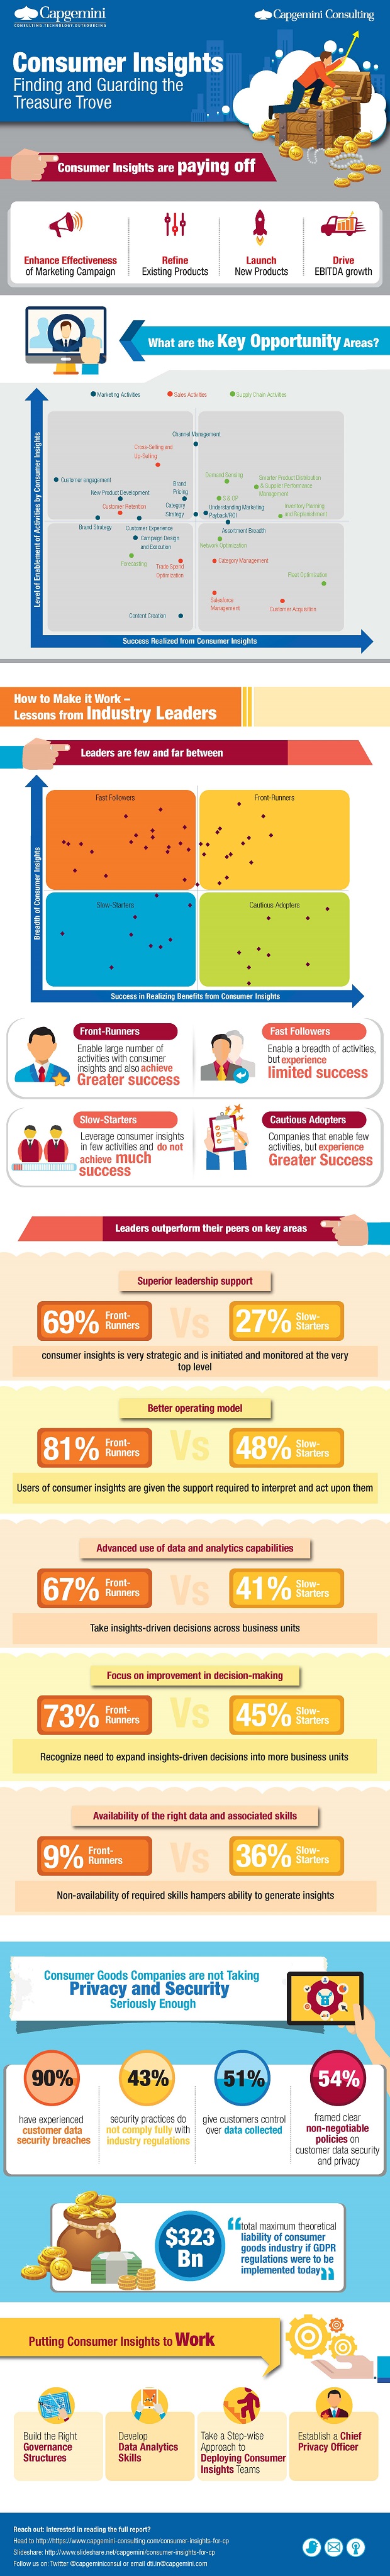 Consumer_Insights_Infographic.jpg